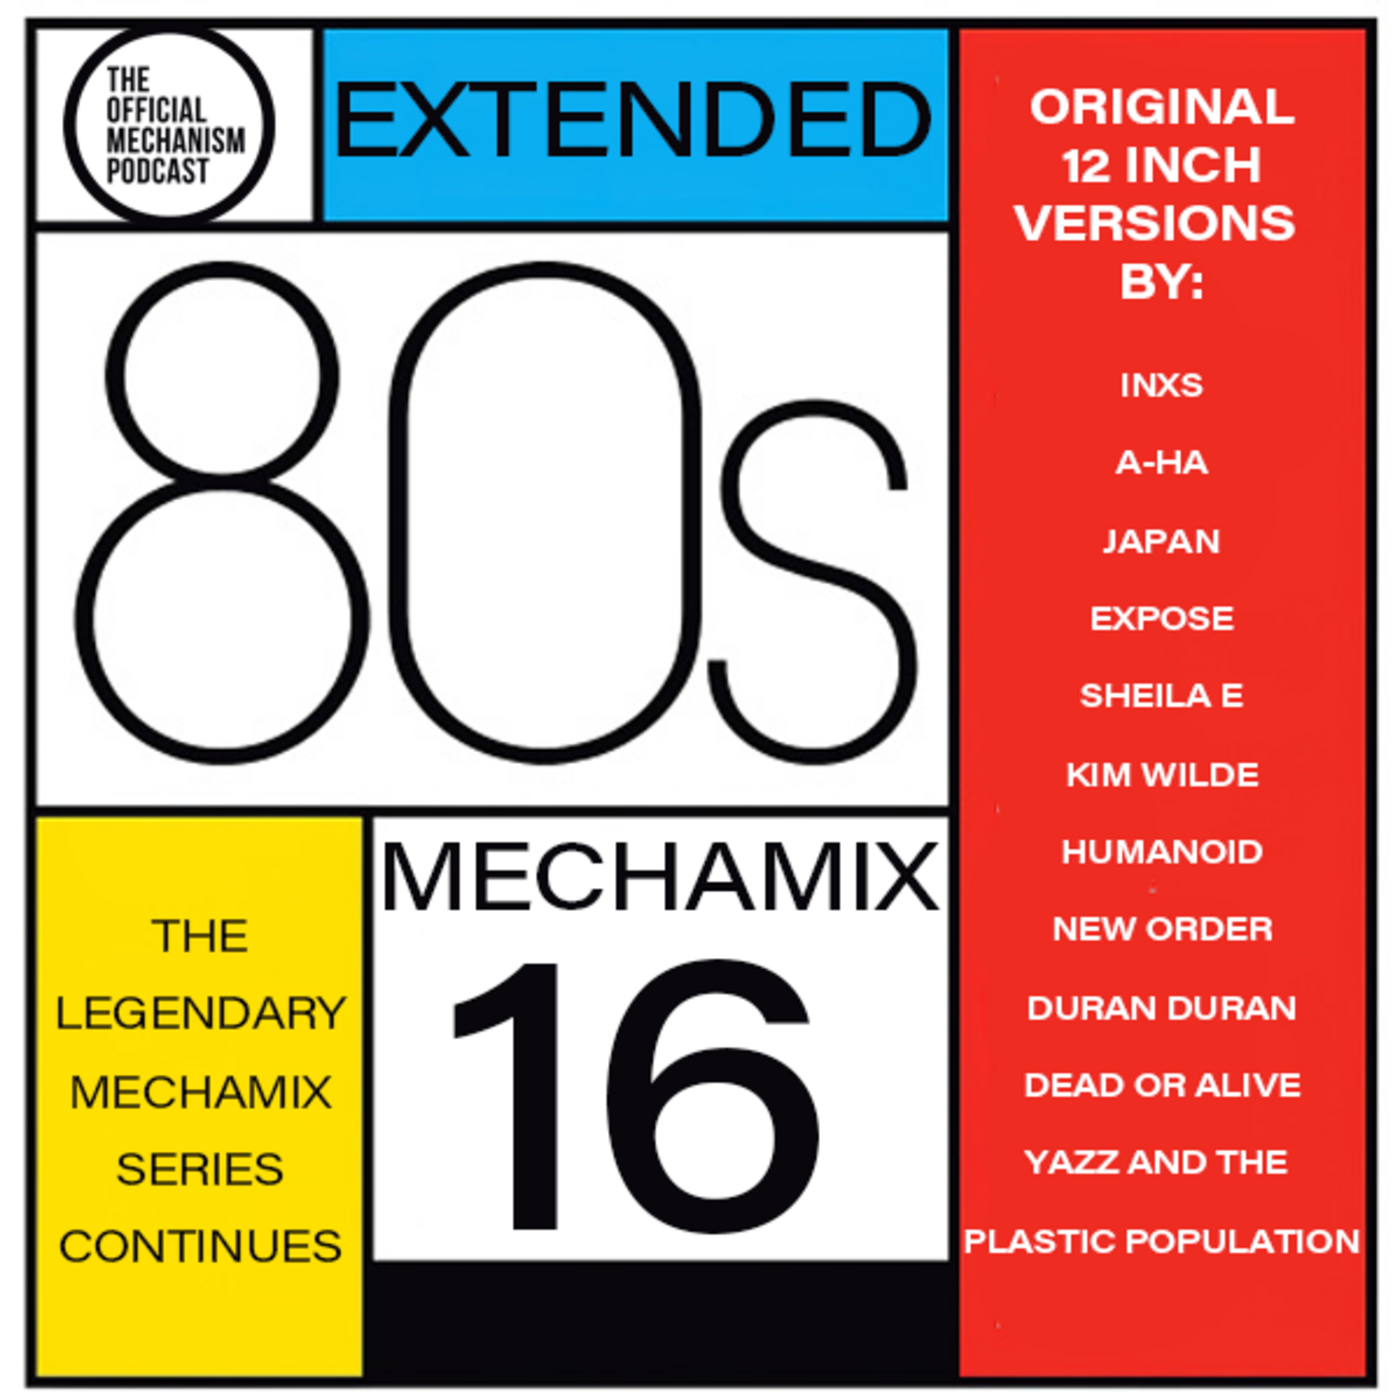 Episode 1163: EXTENDED 80's MECHAMIX 16